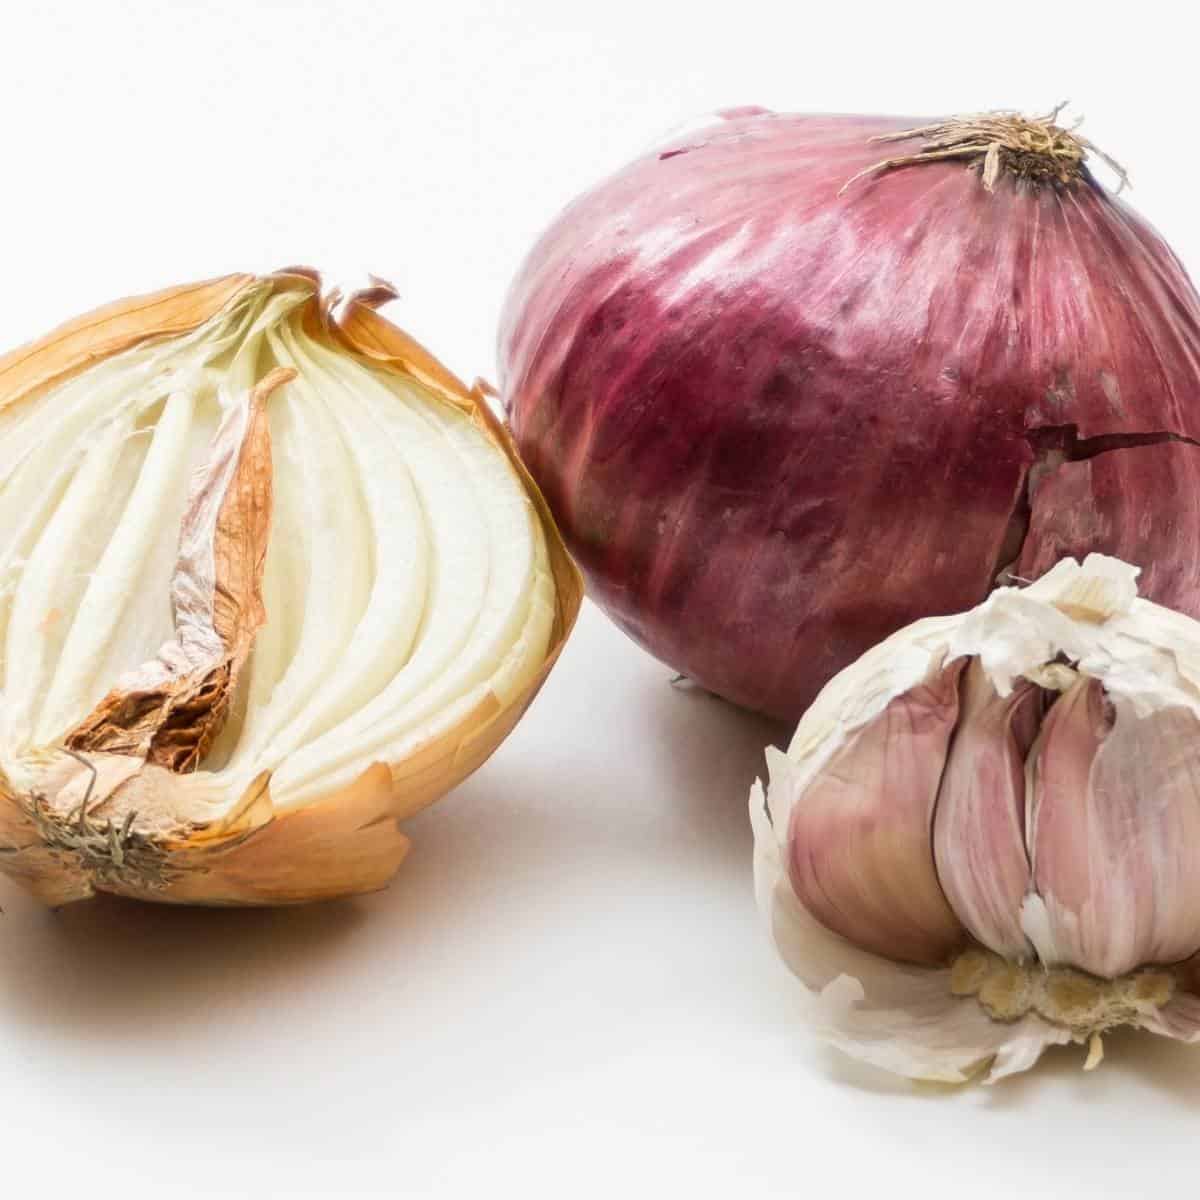 cut open onions and a garlic clove